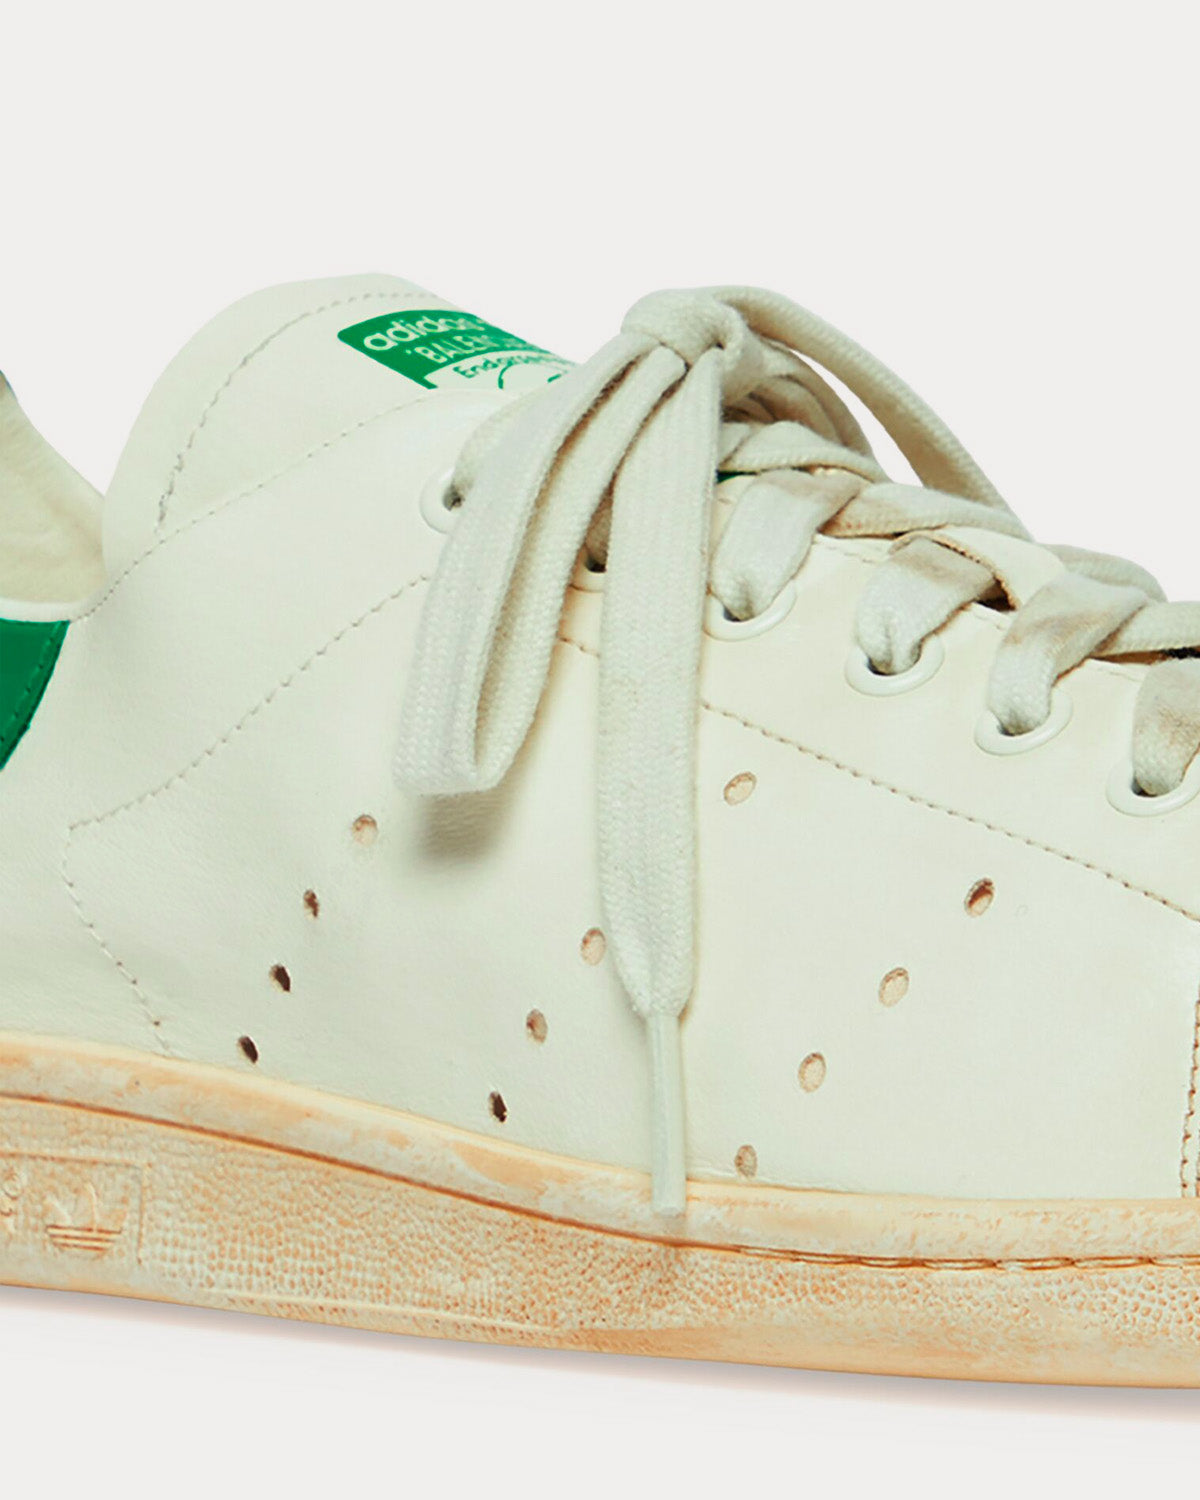 Balenciaga x Adidas - Stan Smith Worn-Out Off-White / Green Low Top Sneakers